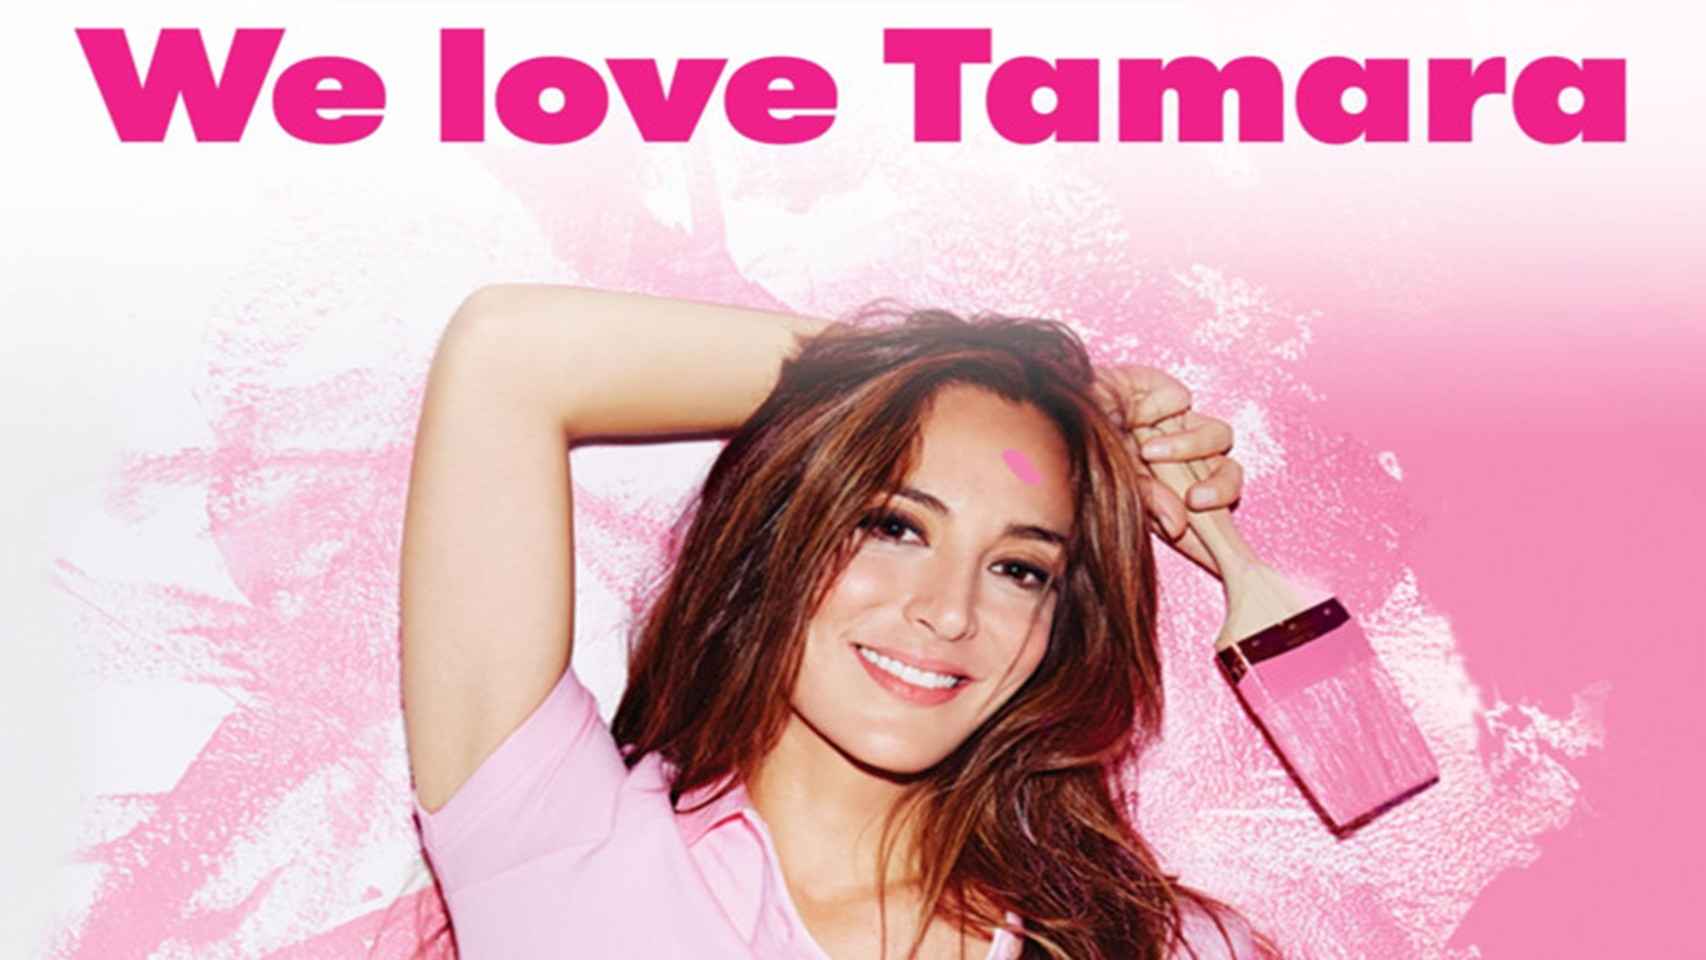 Imagen promocional de We love Tamara